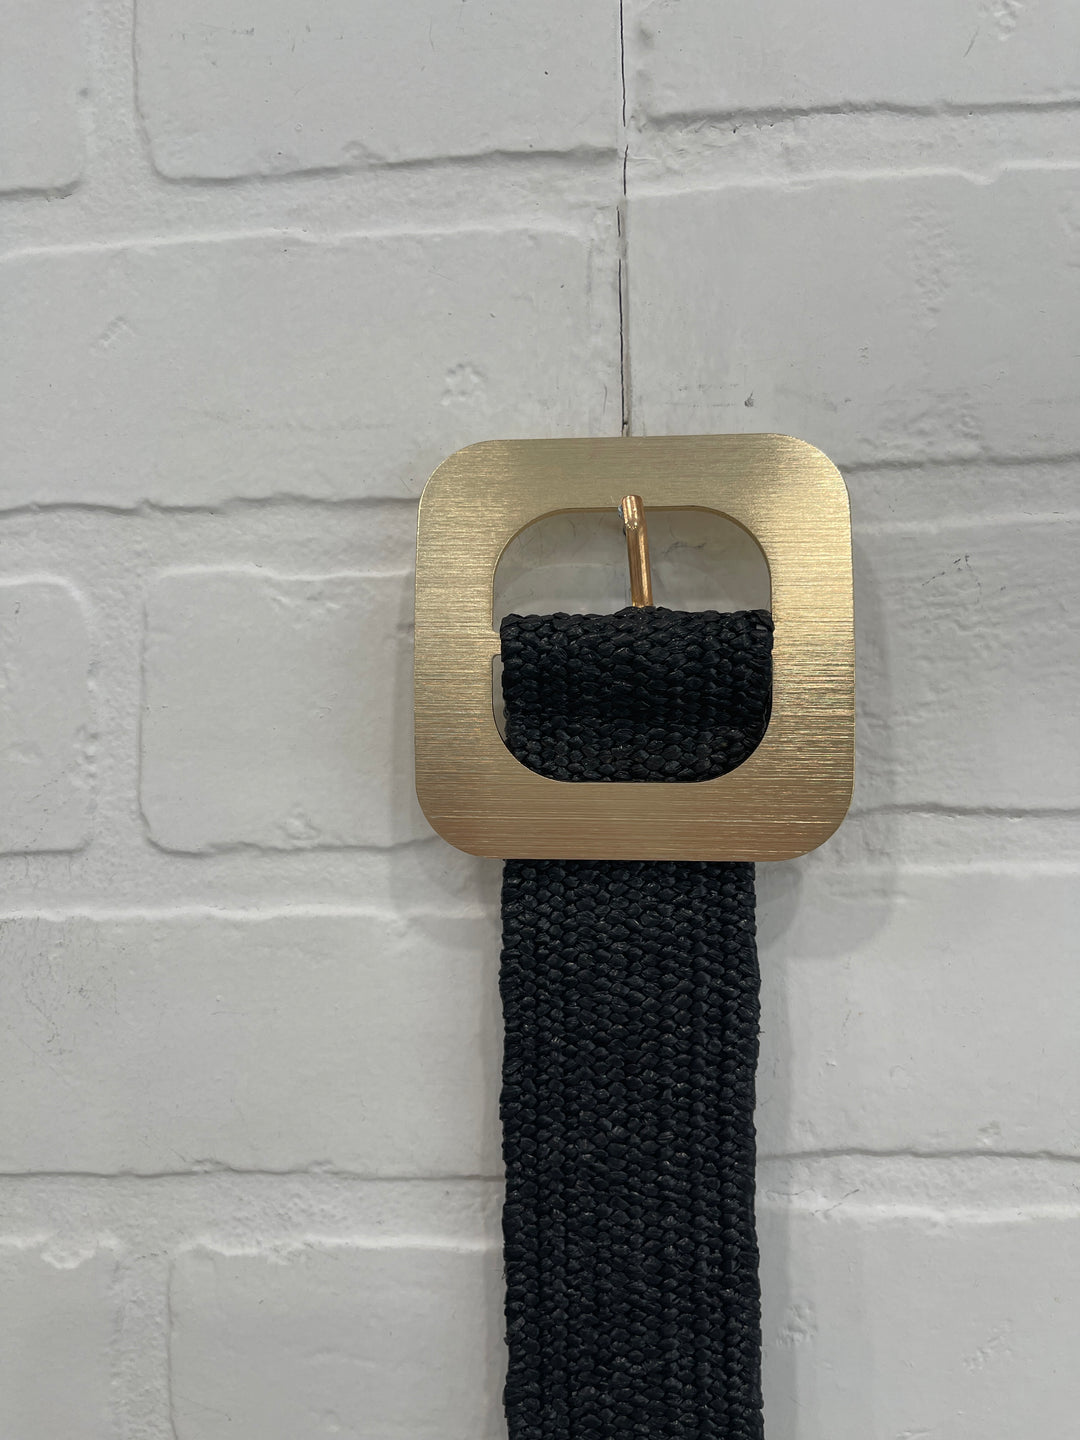 Square gold buckle belt